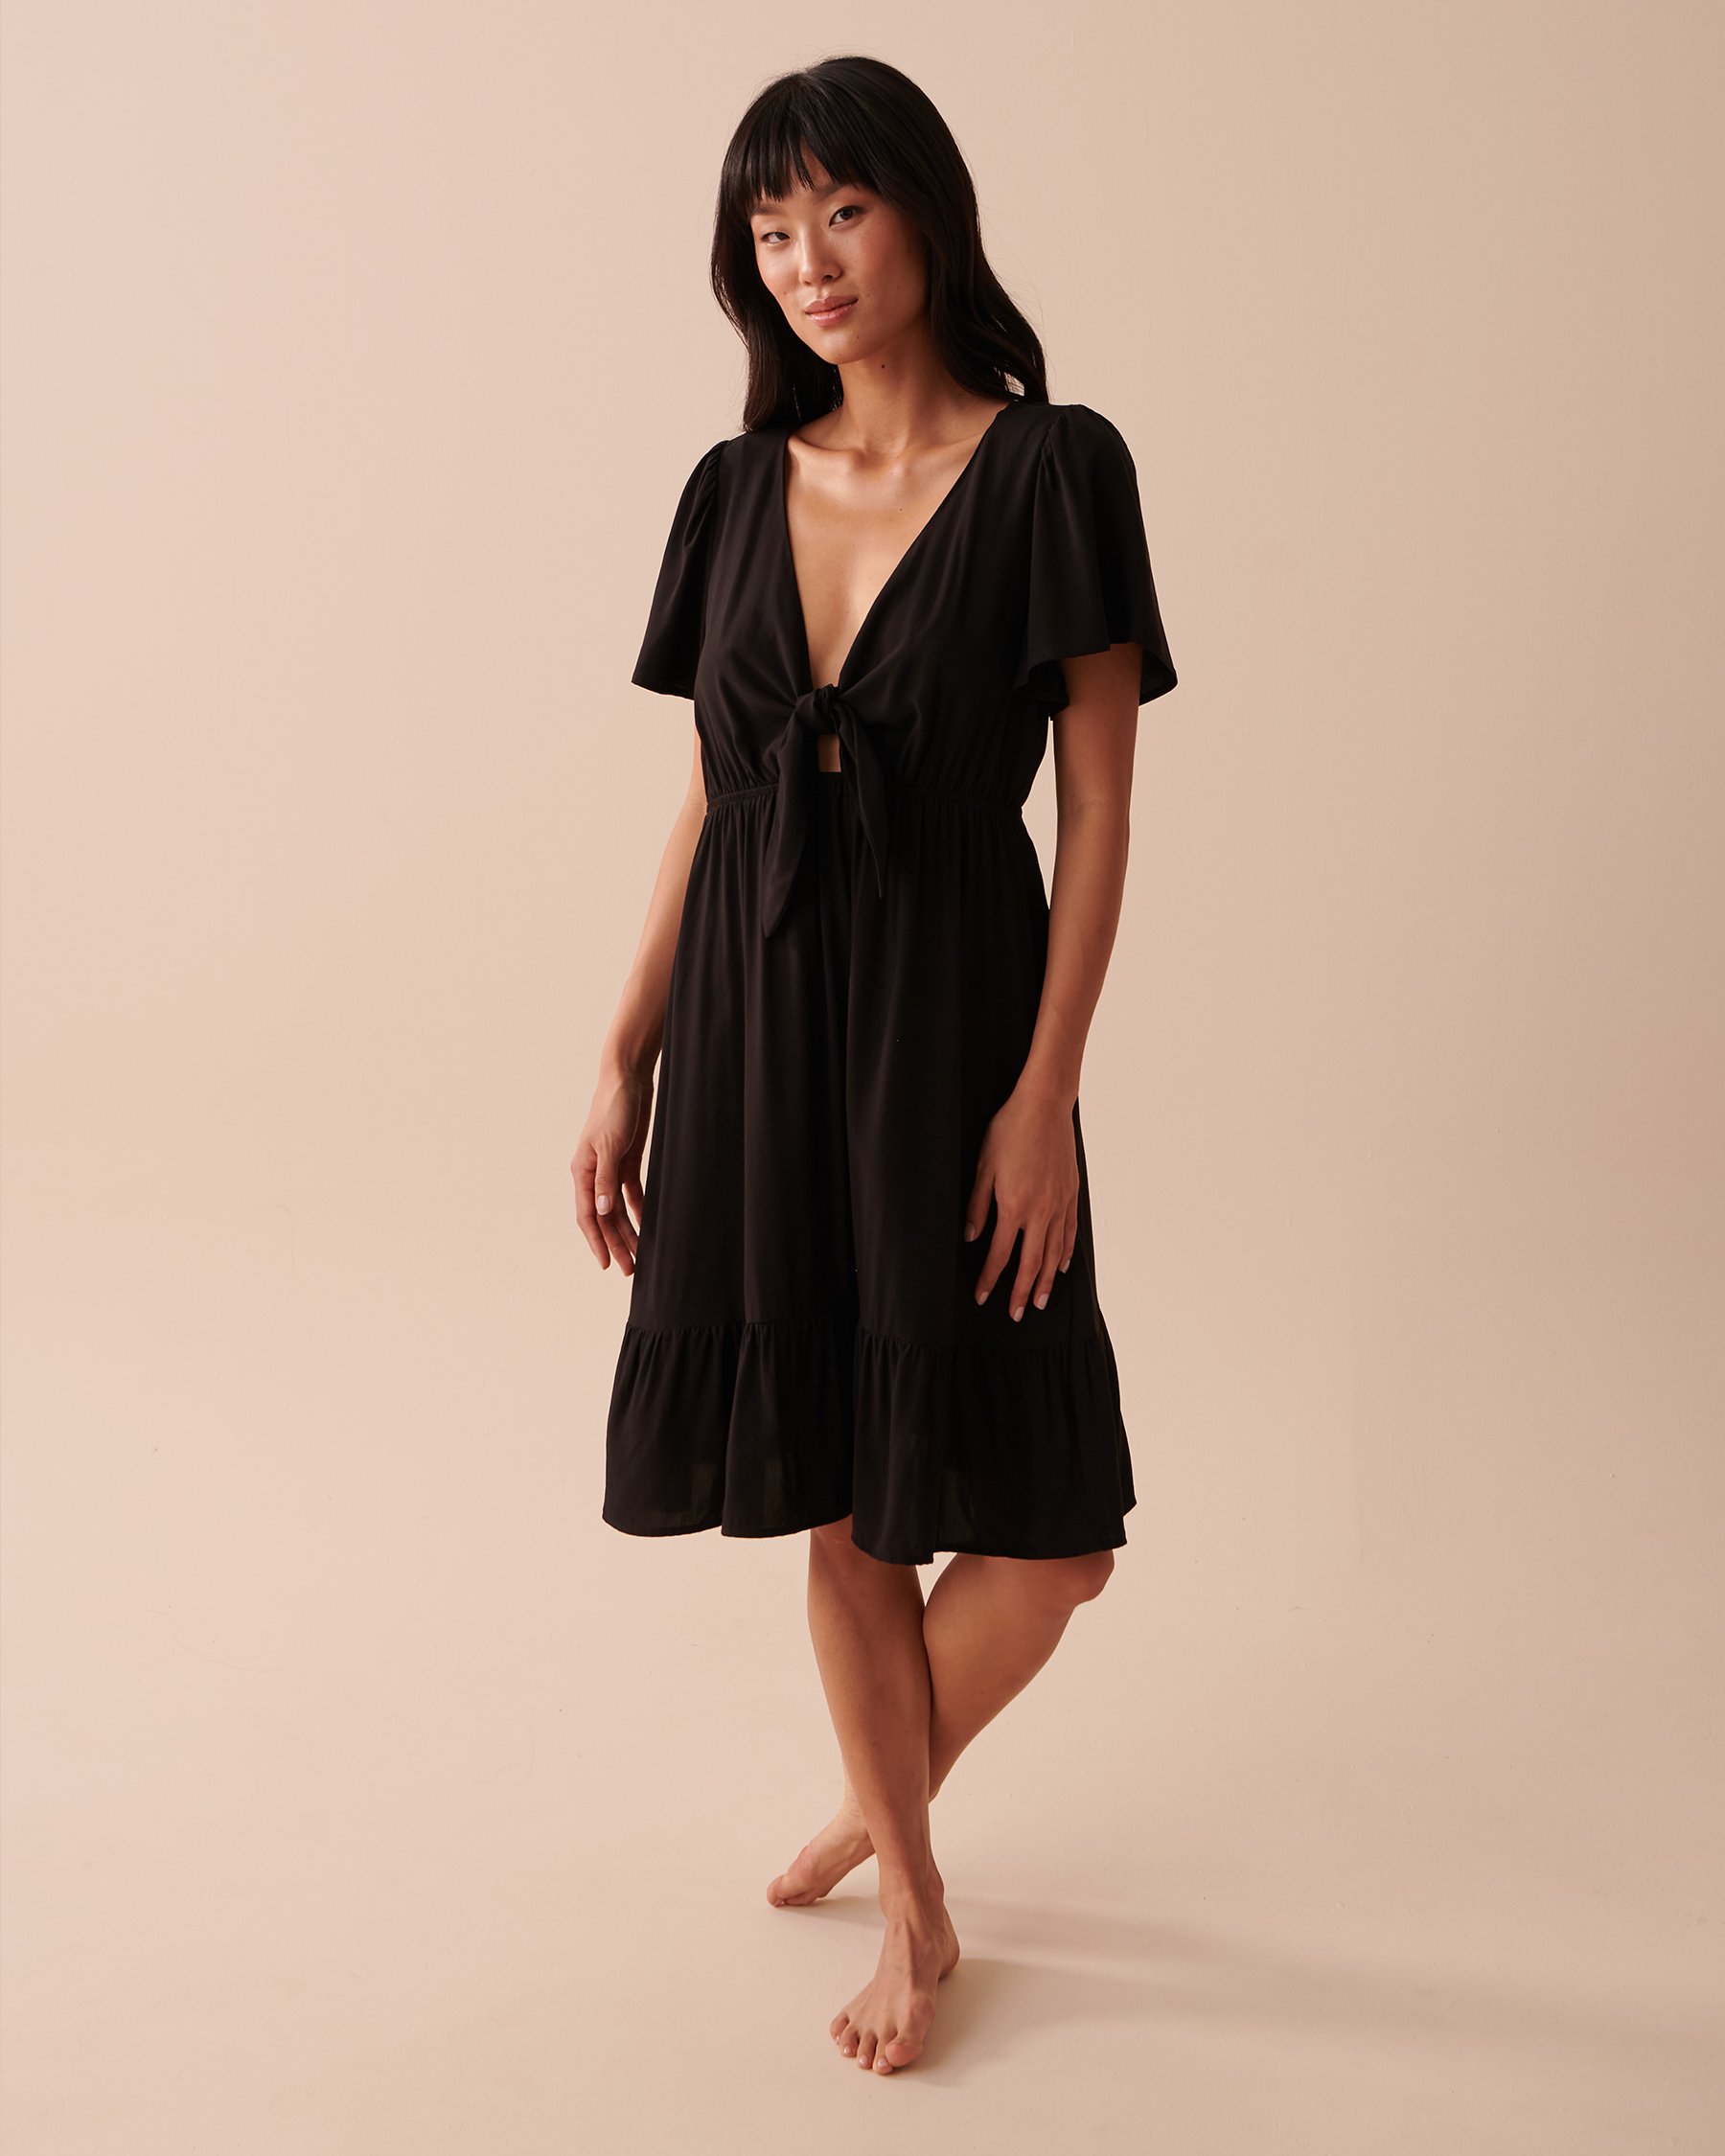 LA VIE EN ROSE AQUA Recycled Fibers Short Sleeve Dress Black 80300088 - View1